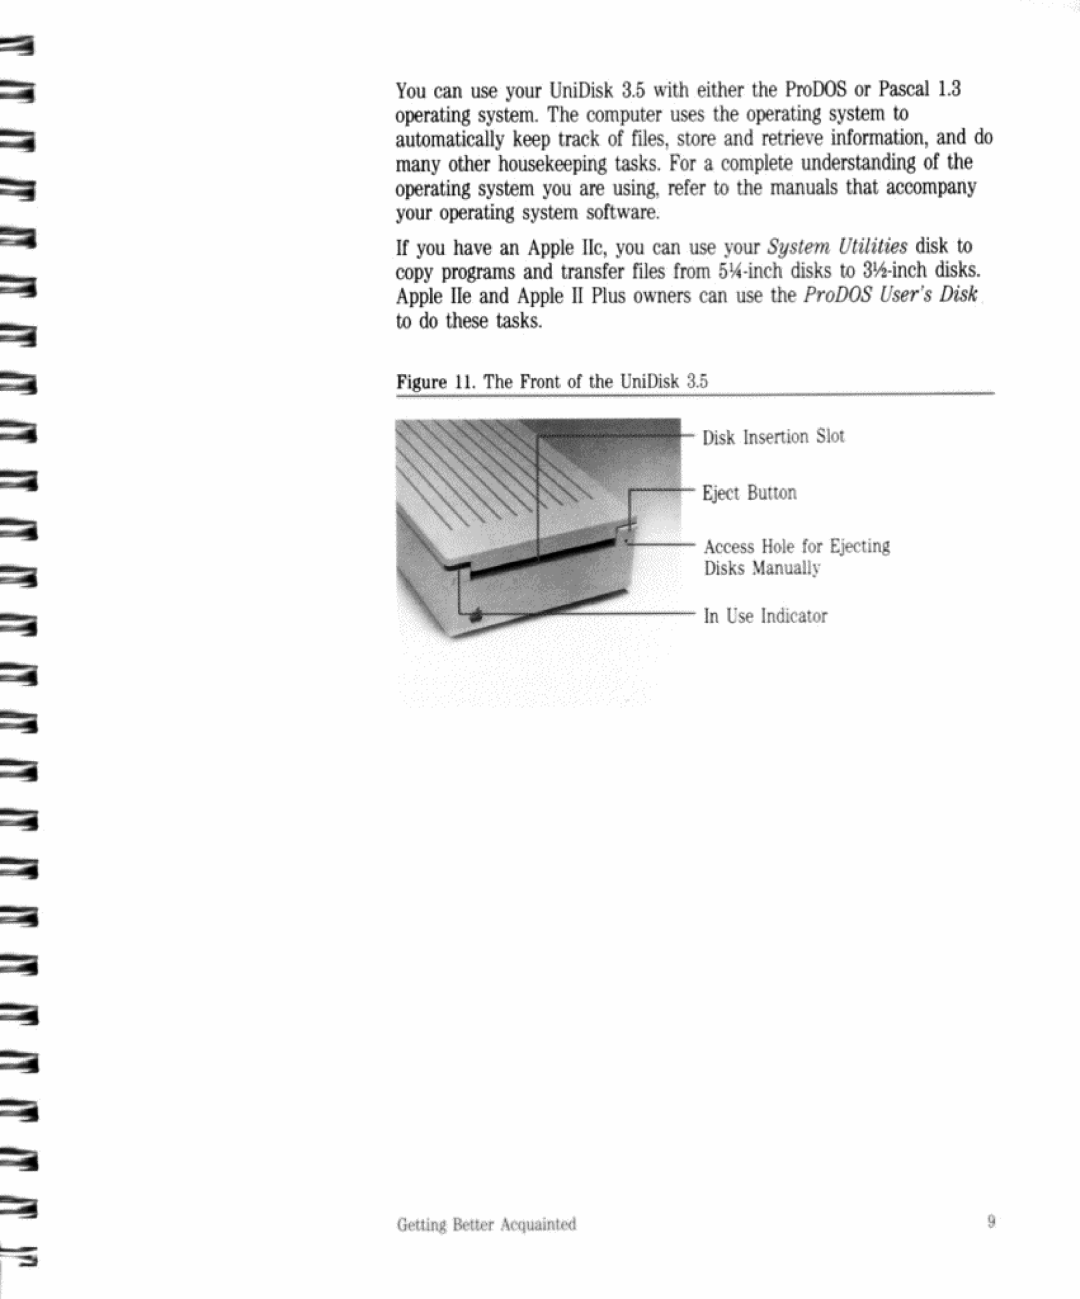 Apple 3.5 manual 